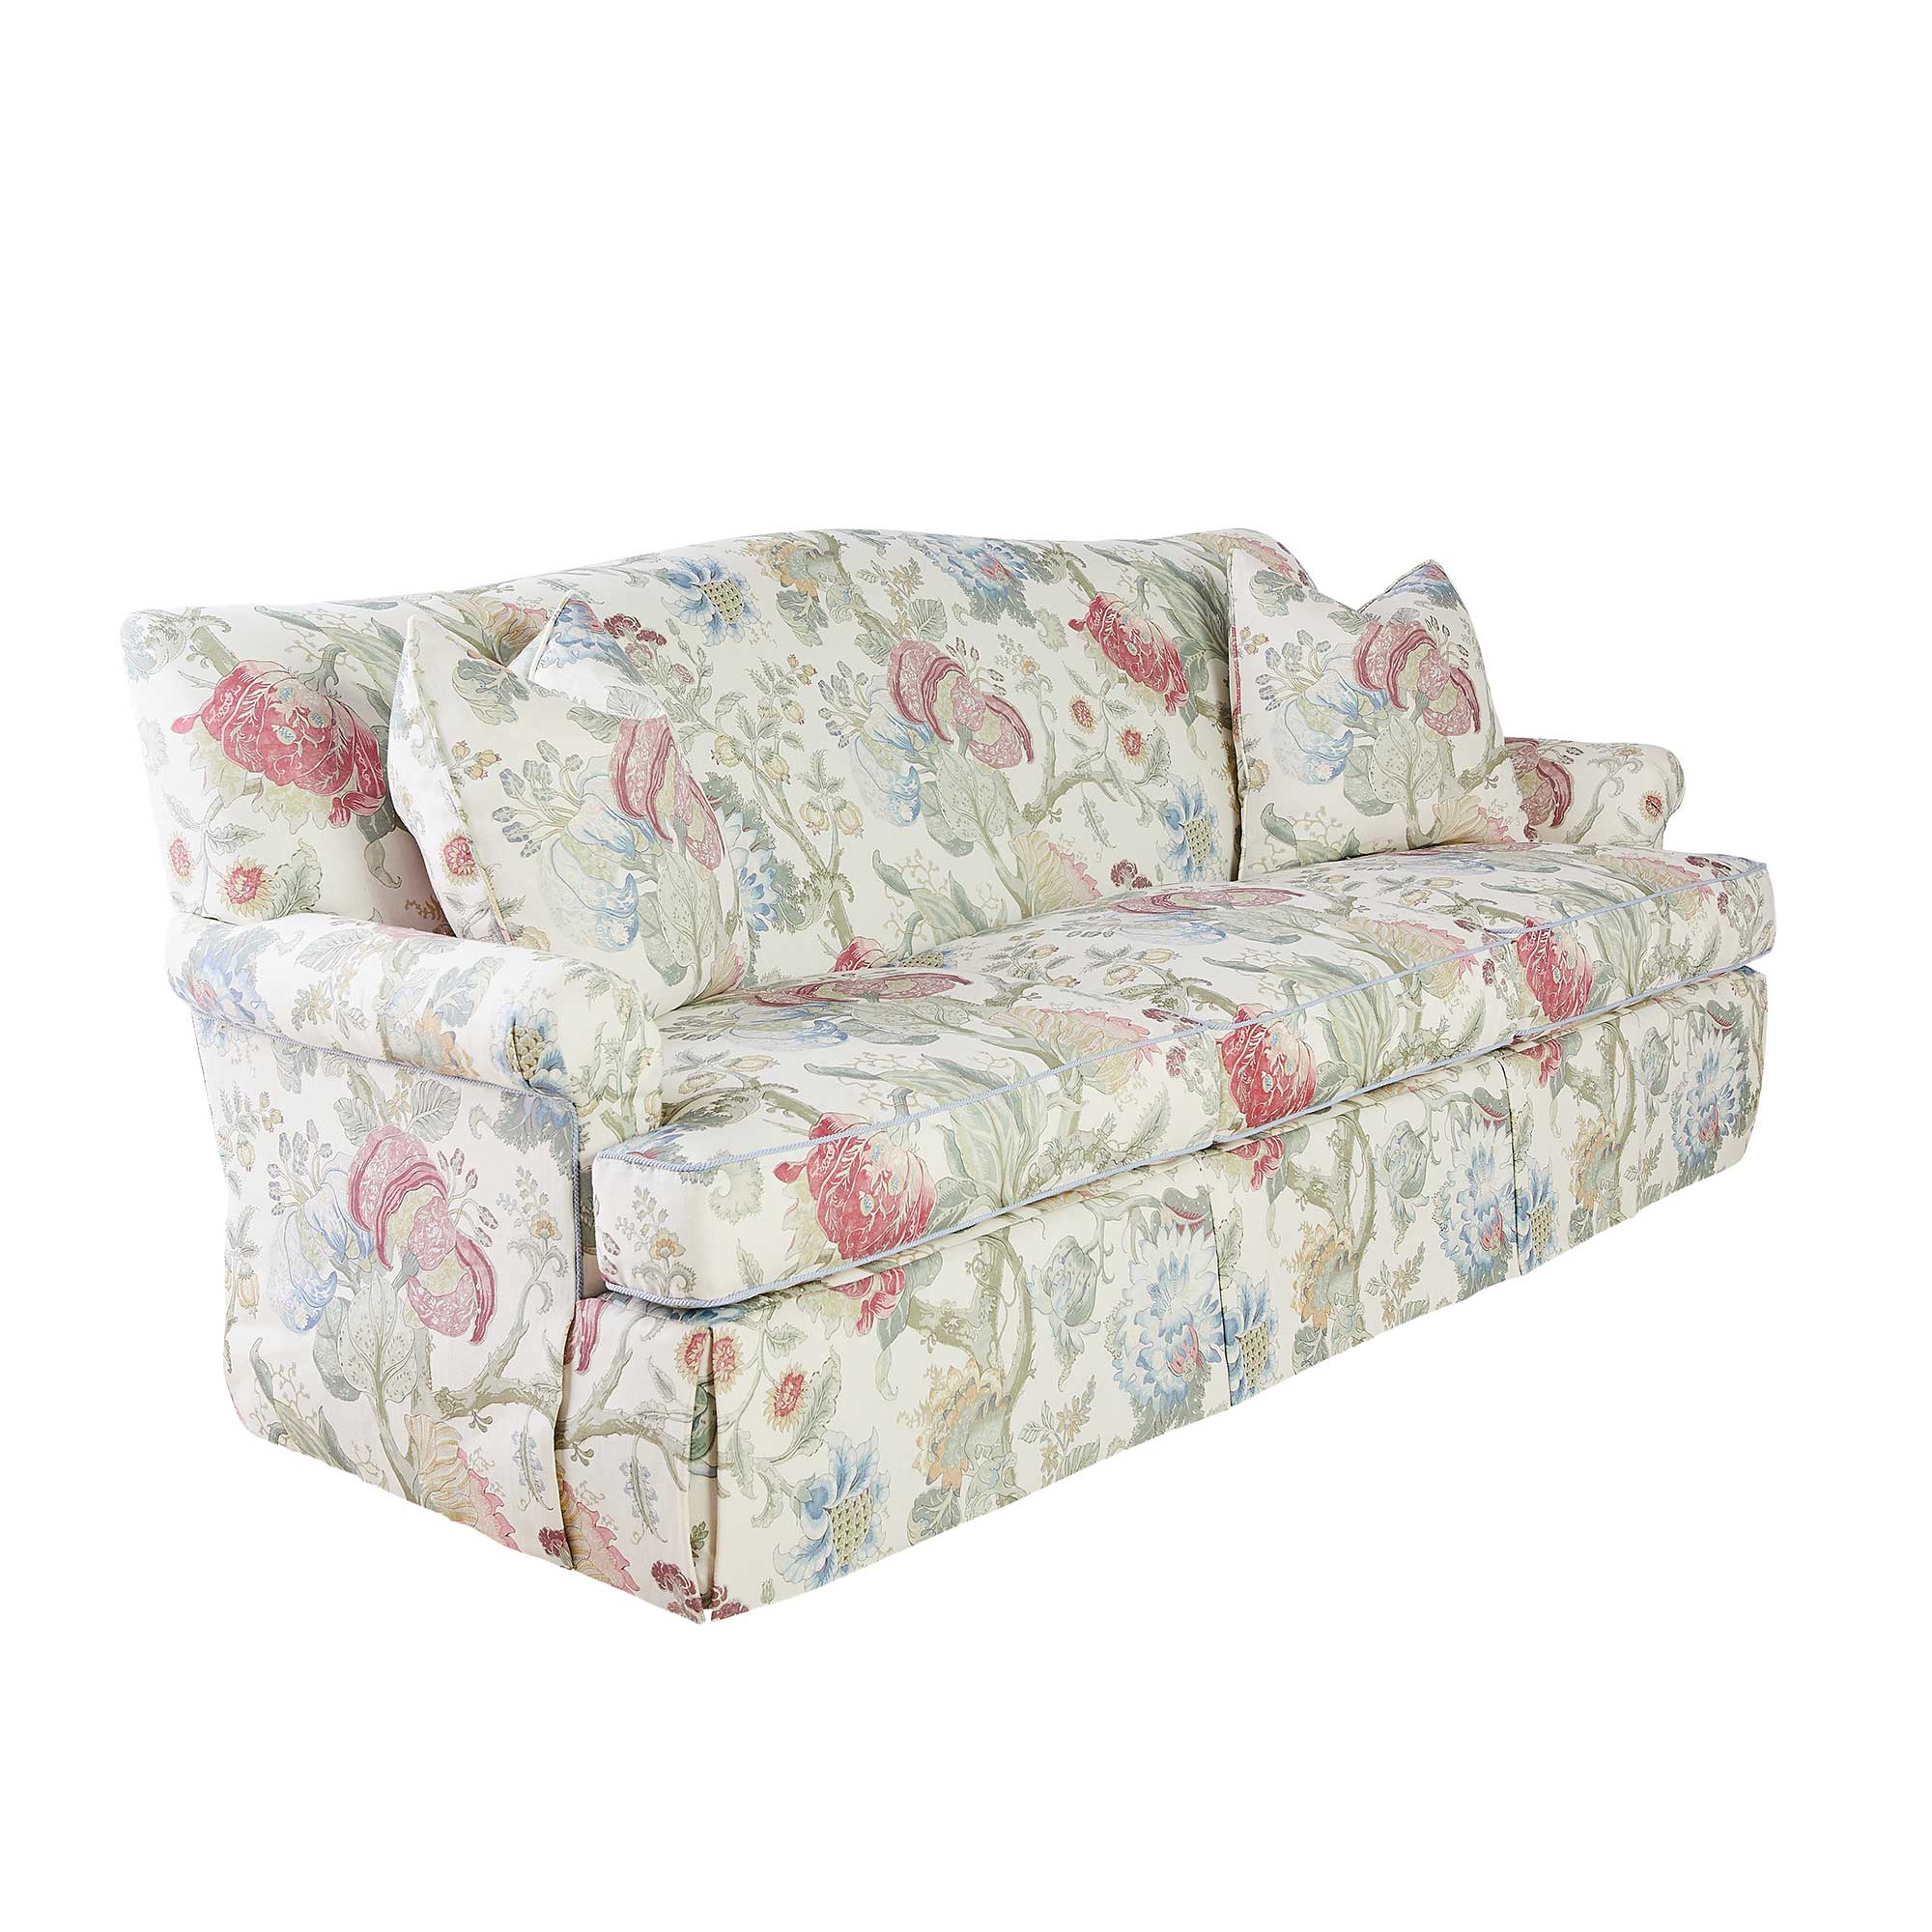 Side of Amelia Dressmaker Sofa in Iris Floral